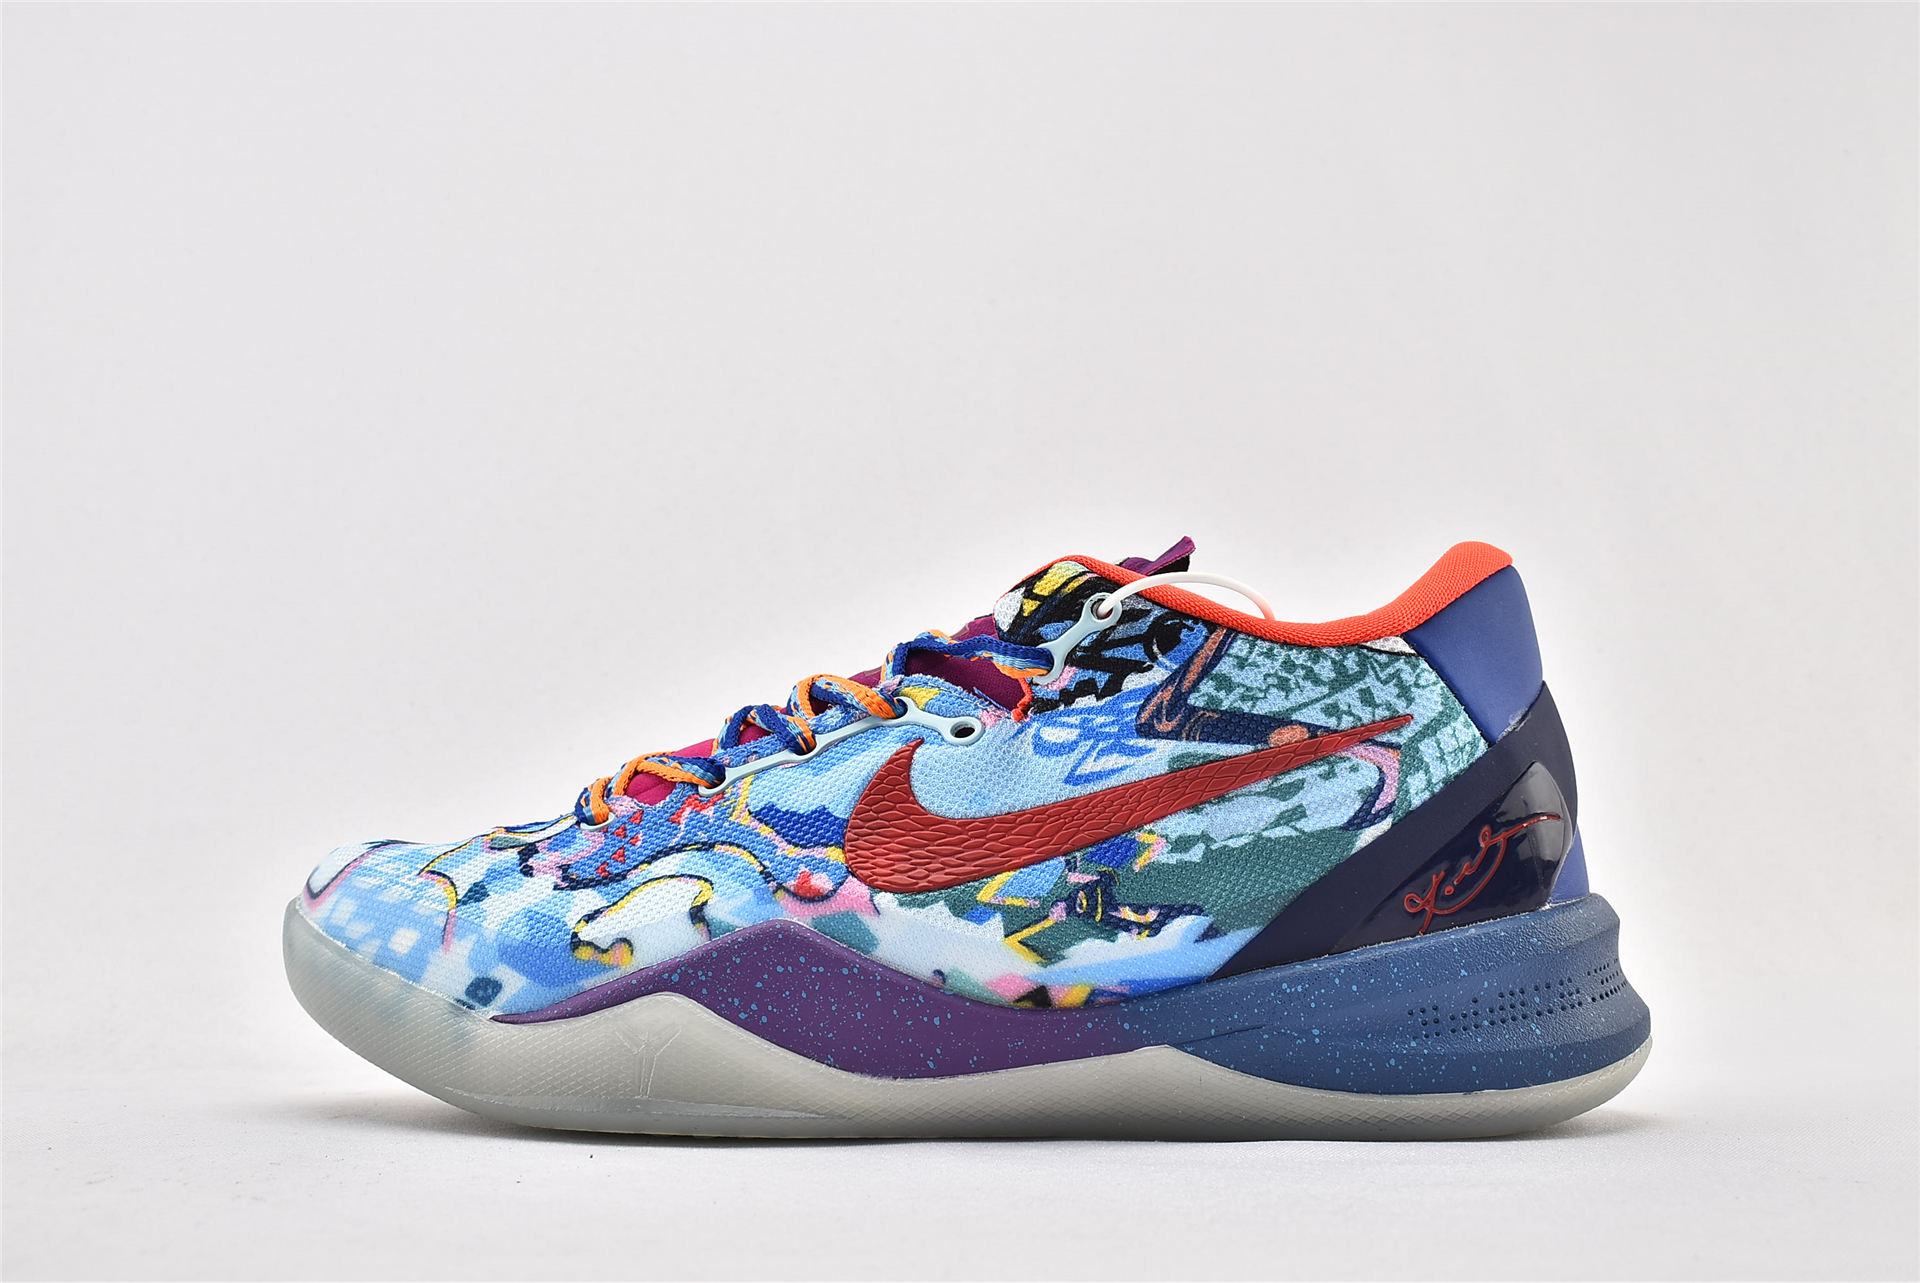 Nike Kobe 8 System Premium “What the 